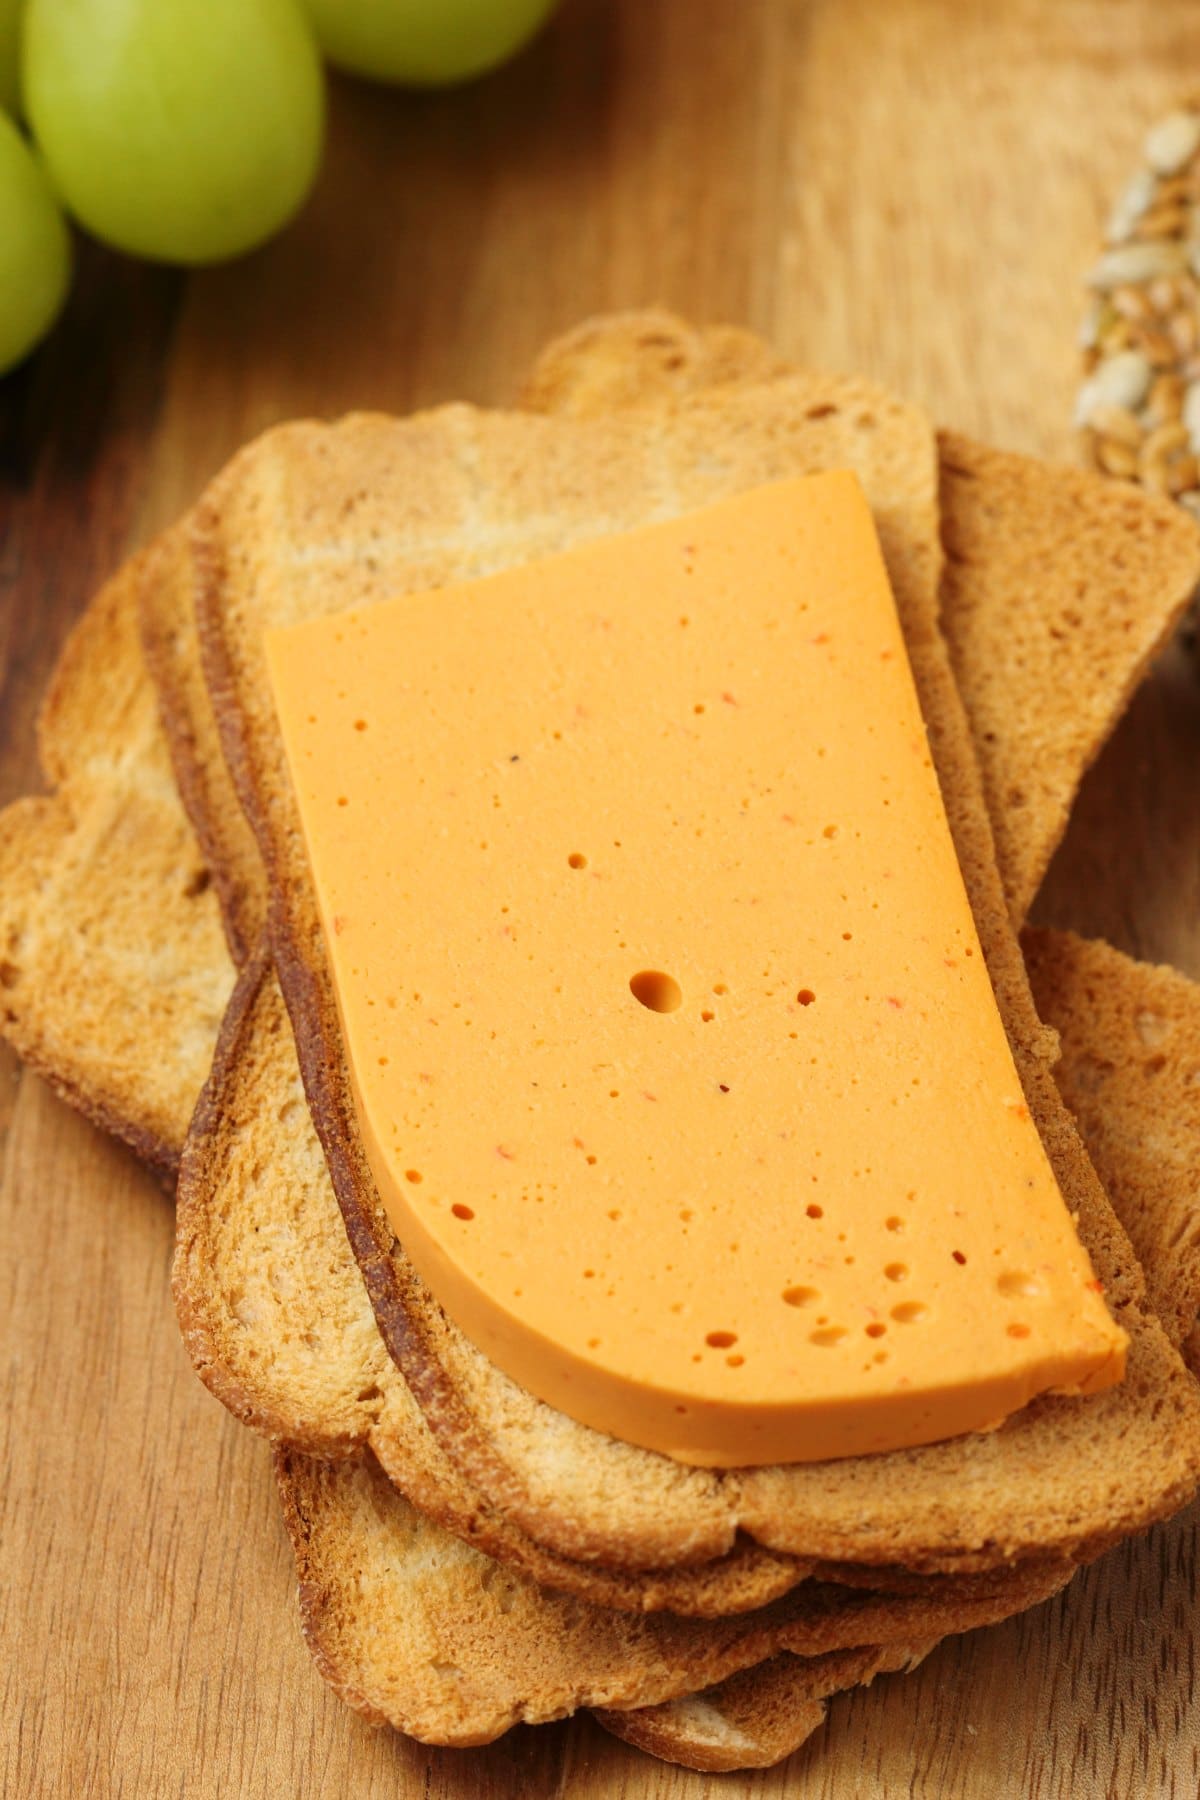 Slicesd vegan cheddar cheese on melba toast. 